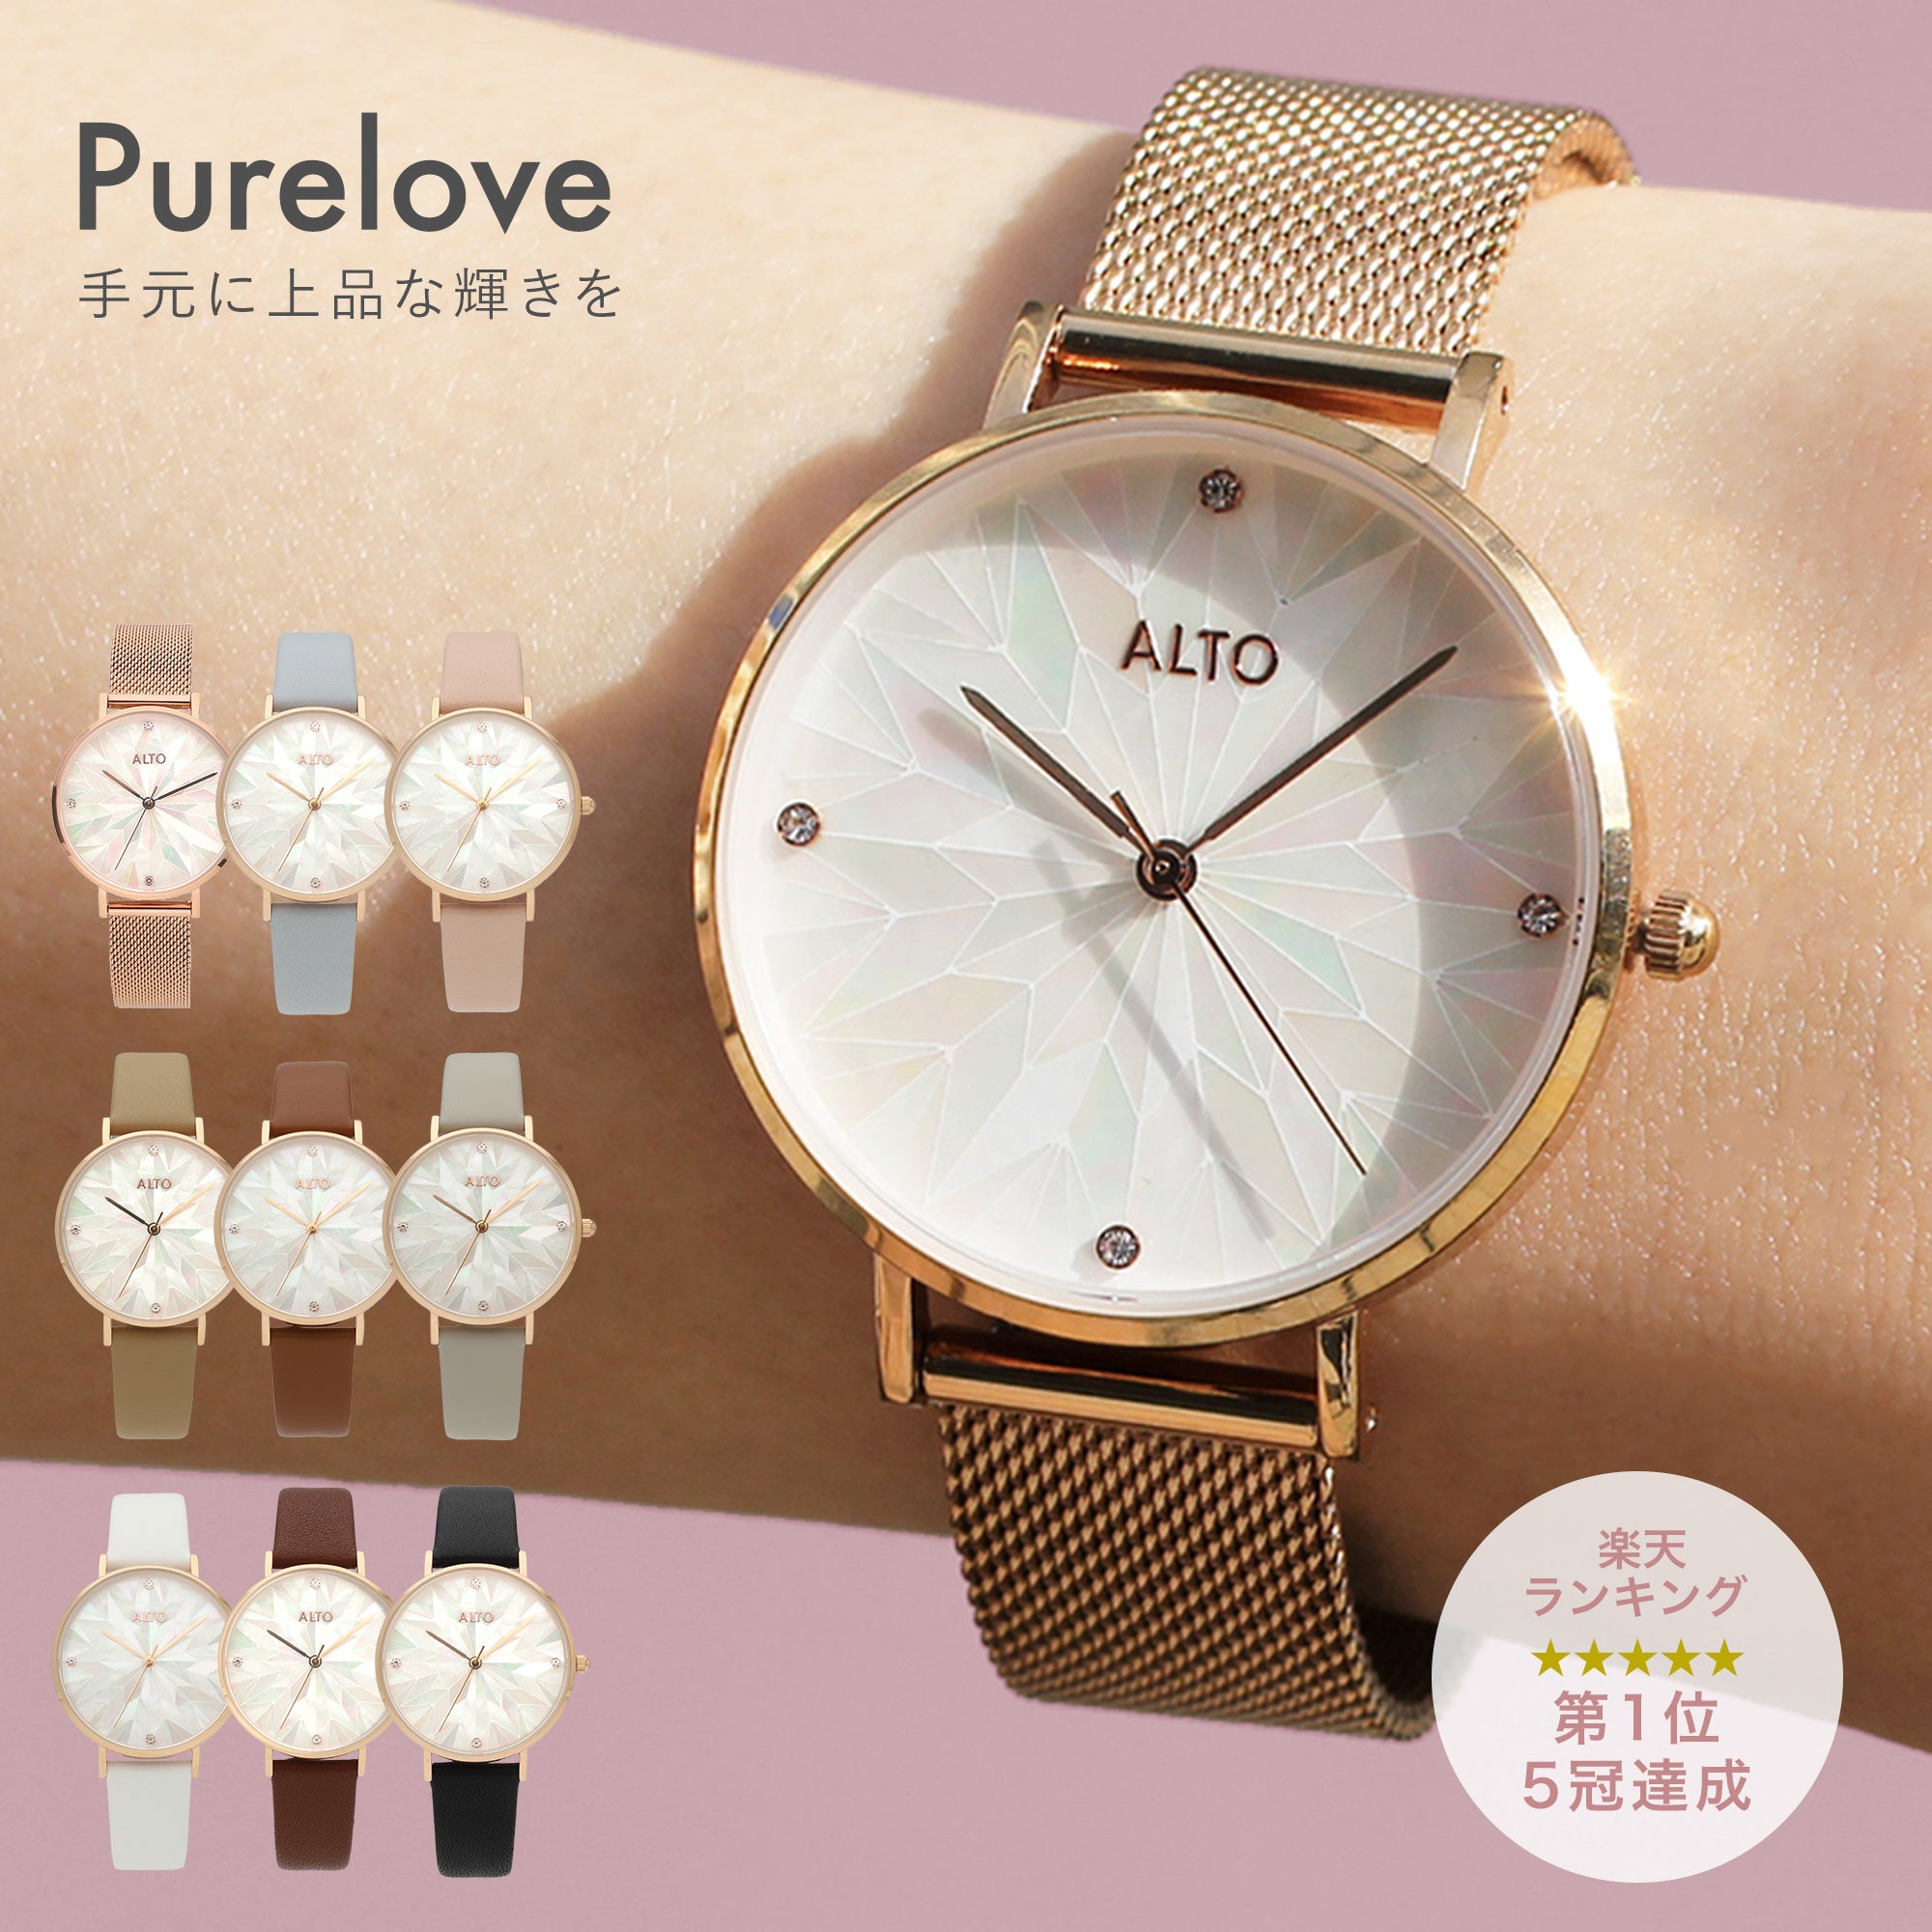 ALTO Purelove 腕時計 – ALTO official